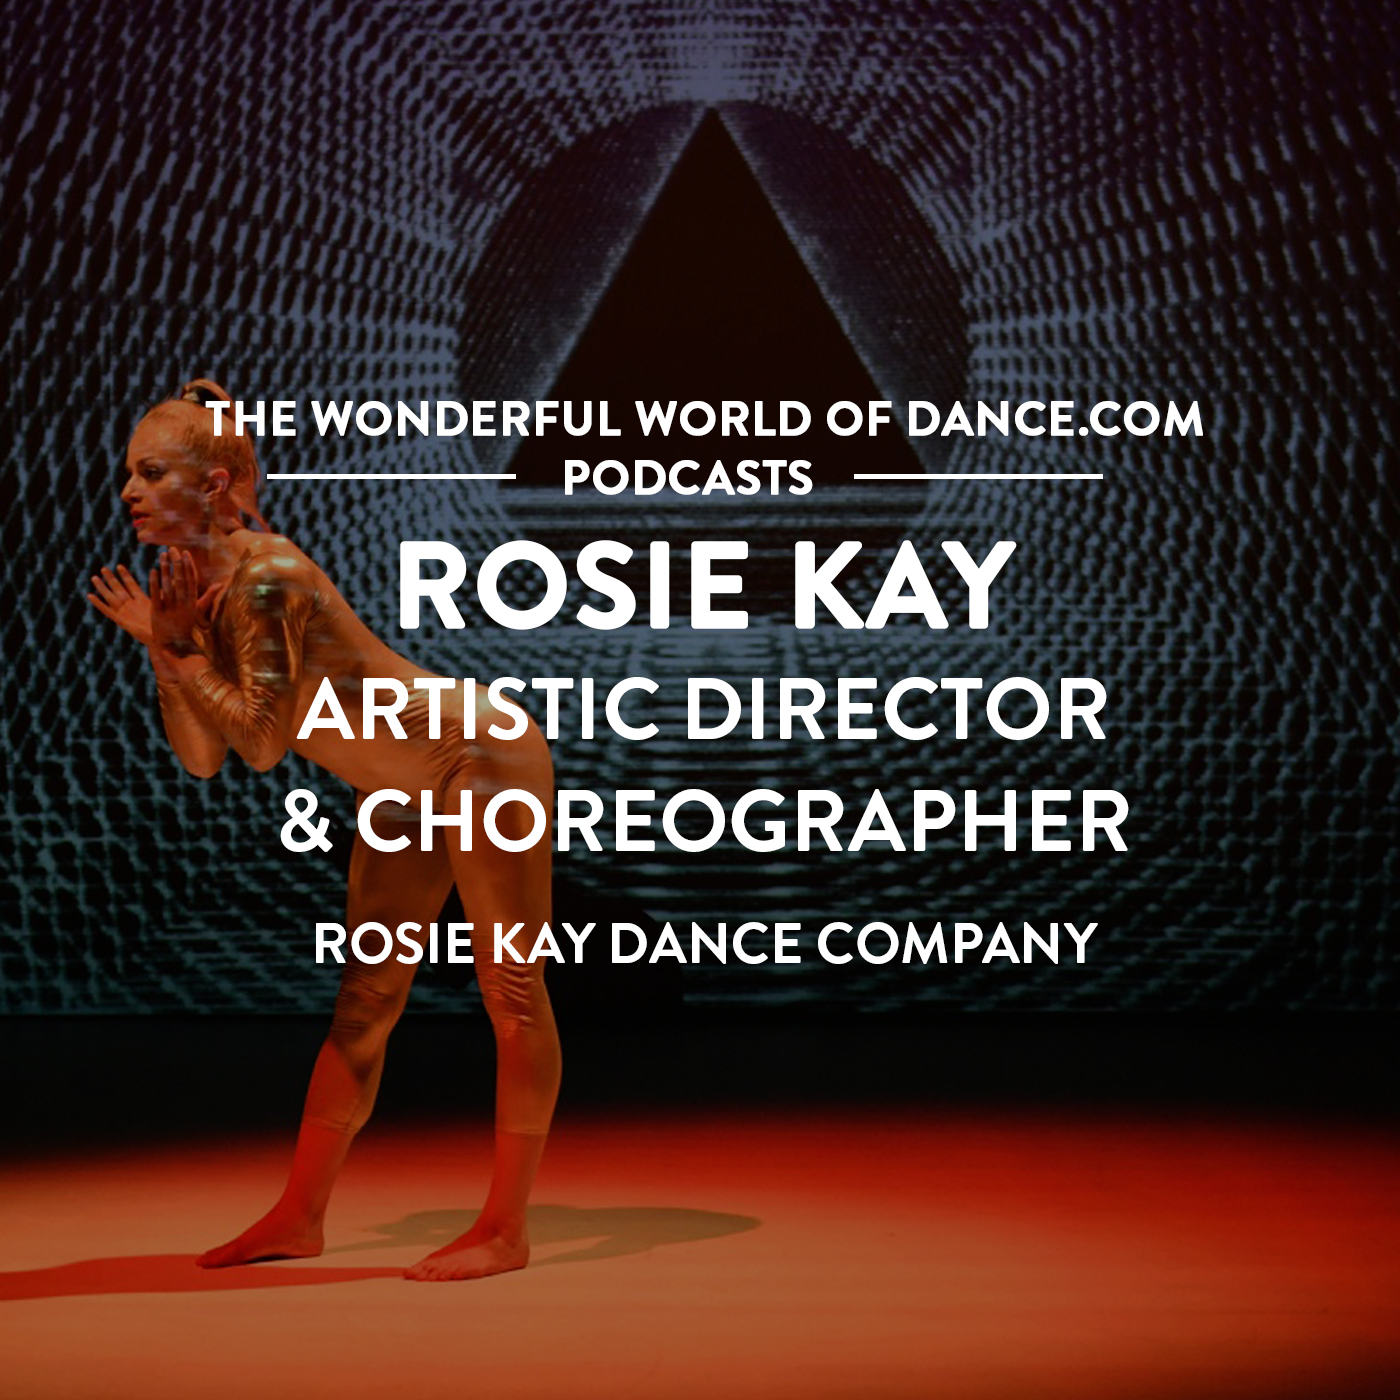 Rosie Kay Dance Company - Shelley Eva Haden in MK ULTRA - photography by Brian Slater